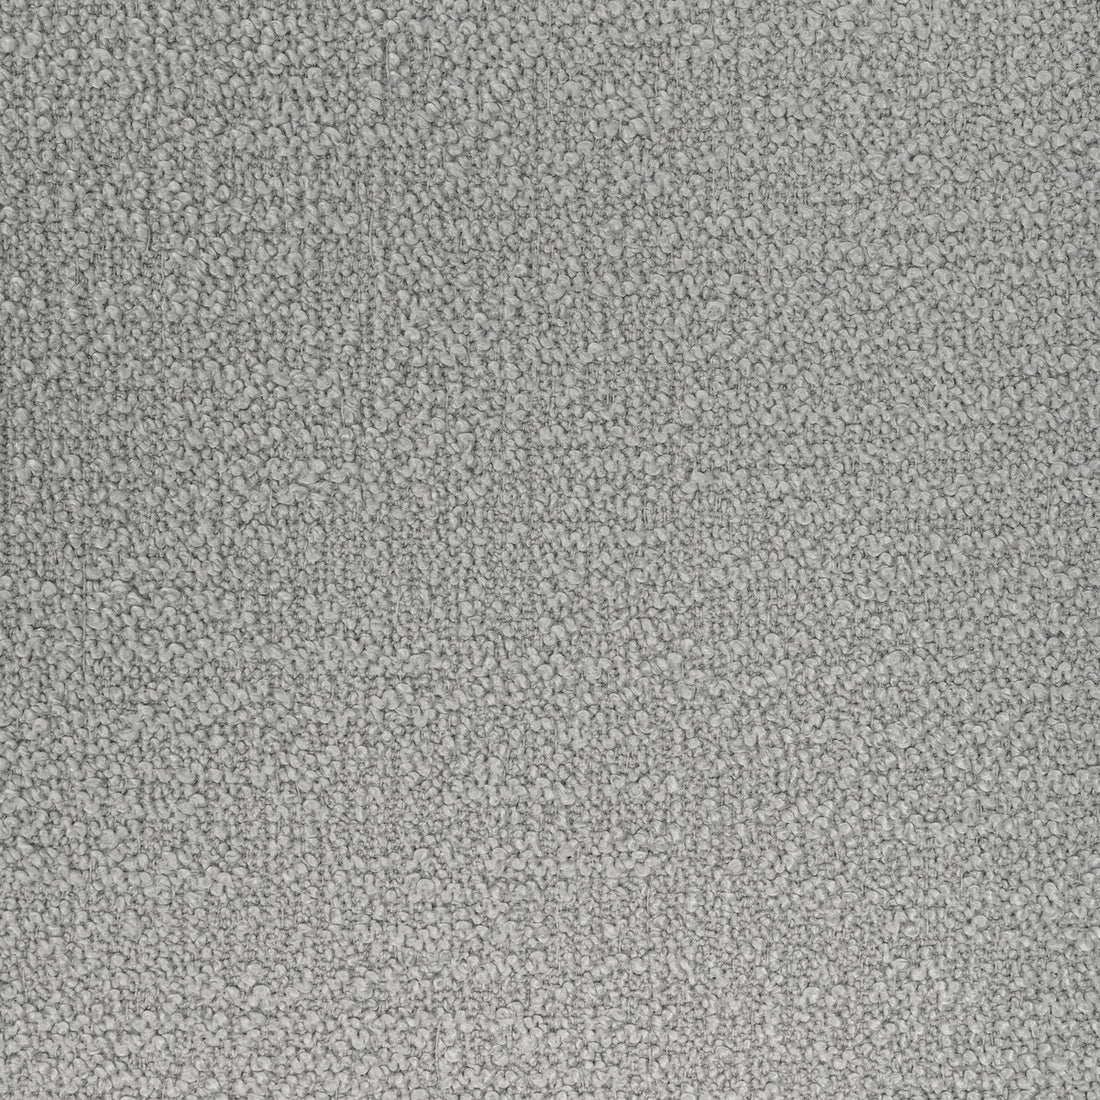 Kravet Smart fabric in 36857-52 color - pattern 36857.52.0 - by Kravet Smart in the Performance Kravetarmor collection